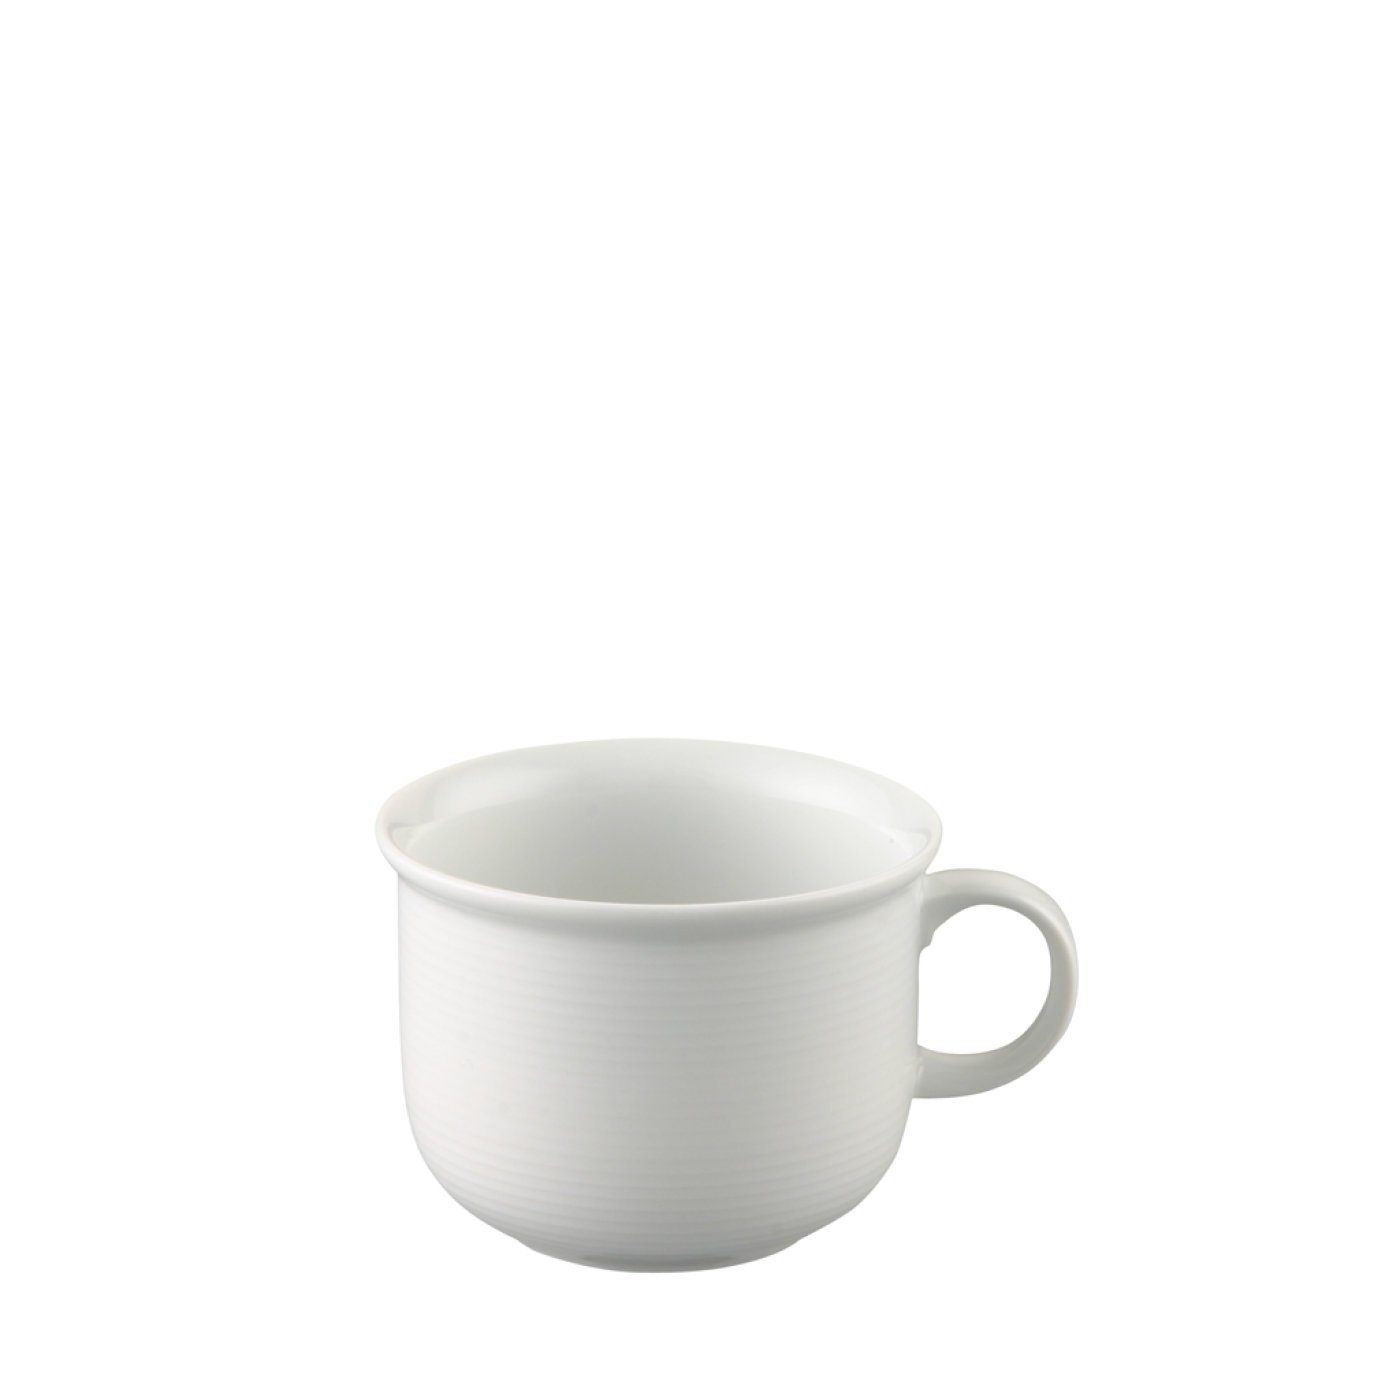 und Thomas Porzellan Kaffee-Obertasse Porzellan, spülmaschinenfest - Stück, mikrowellengeeignet - Weiß 1 Tasse Porzellan, TREND